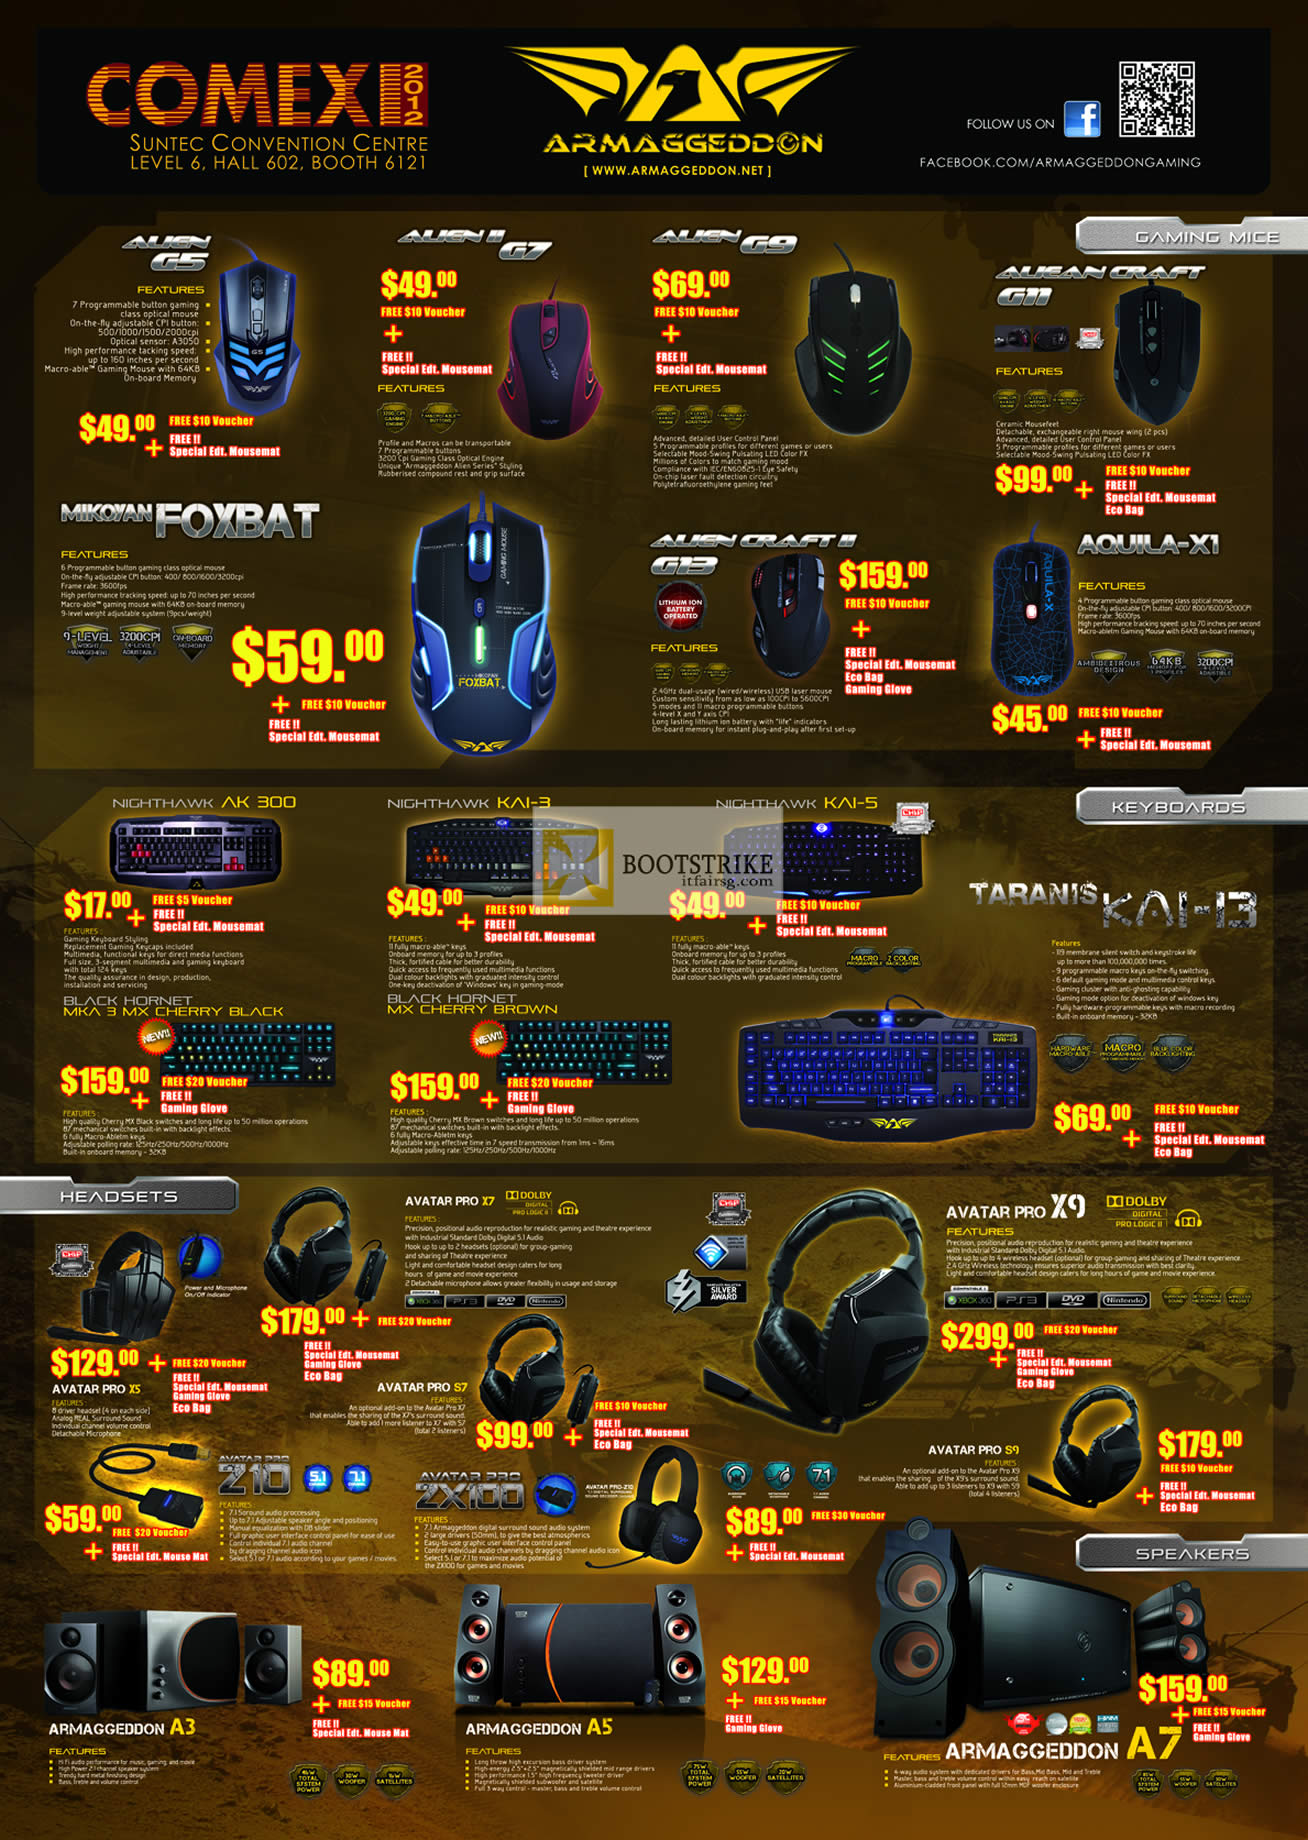 COMEX 2012 price list image brochure of Leap Frog Armaggeddon Mouse Alien G5 G7 G9 G11, Keyboard NightHawk AK 300 KAI-3 KAI-5 Taranis, Headset Avatar, Speakers A3 A5 A7